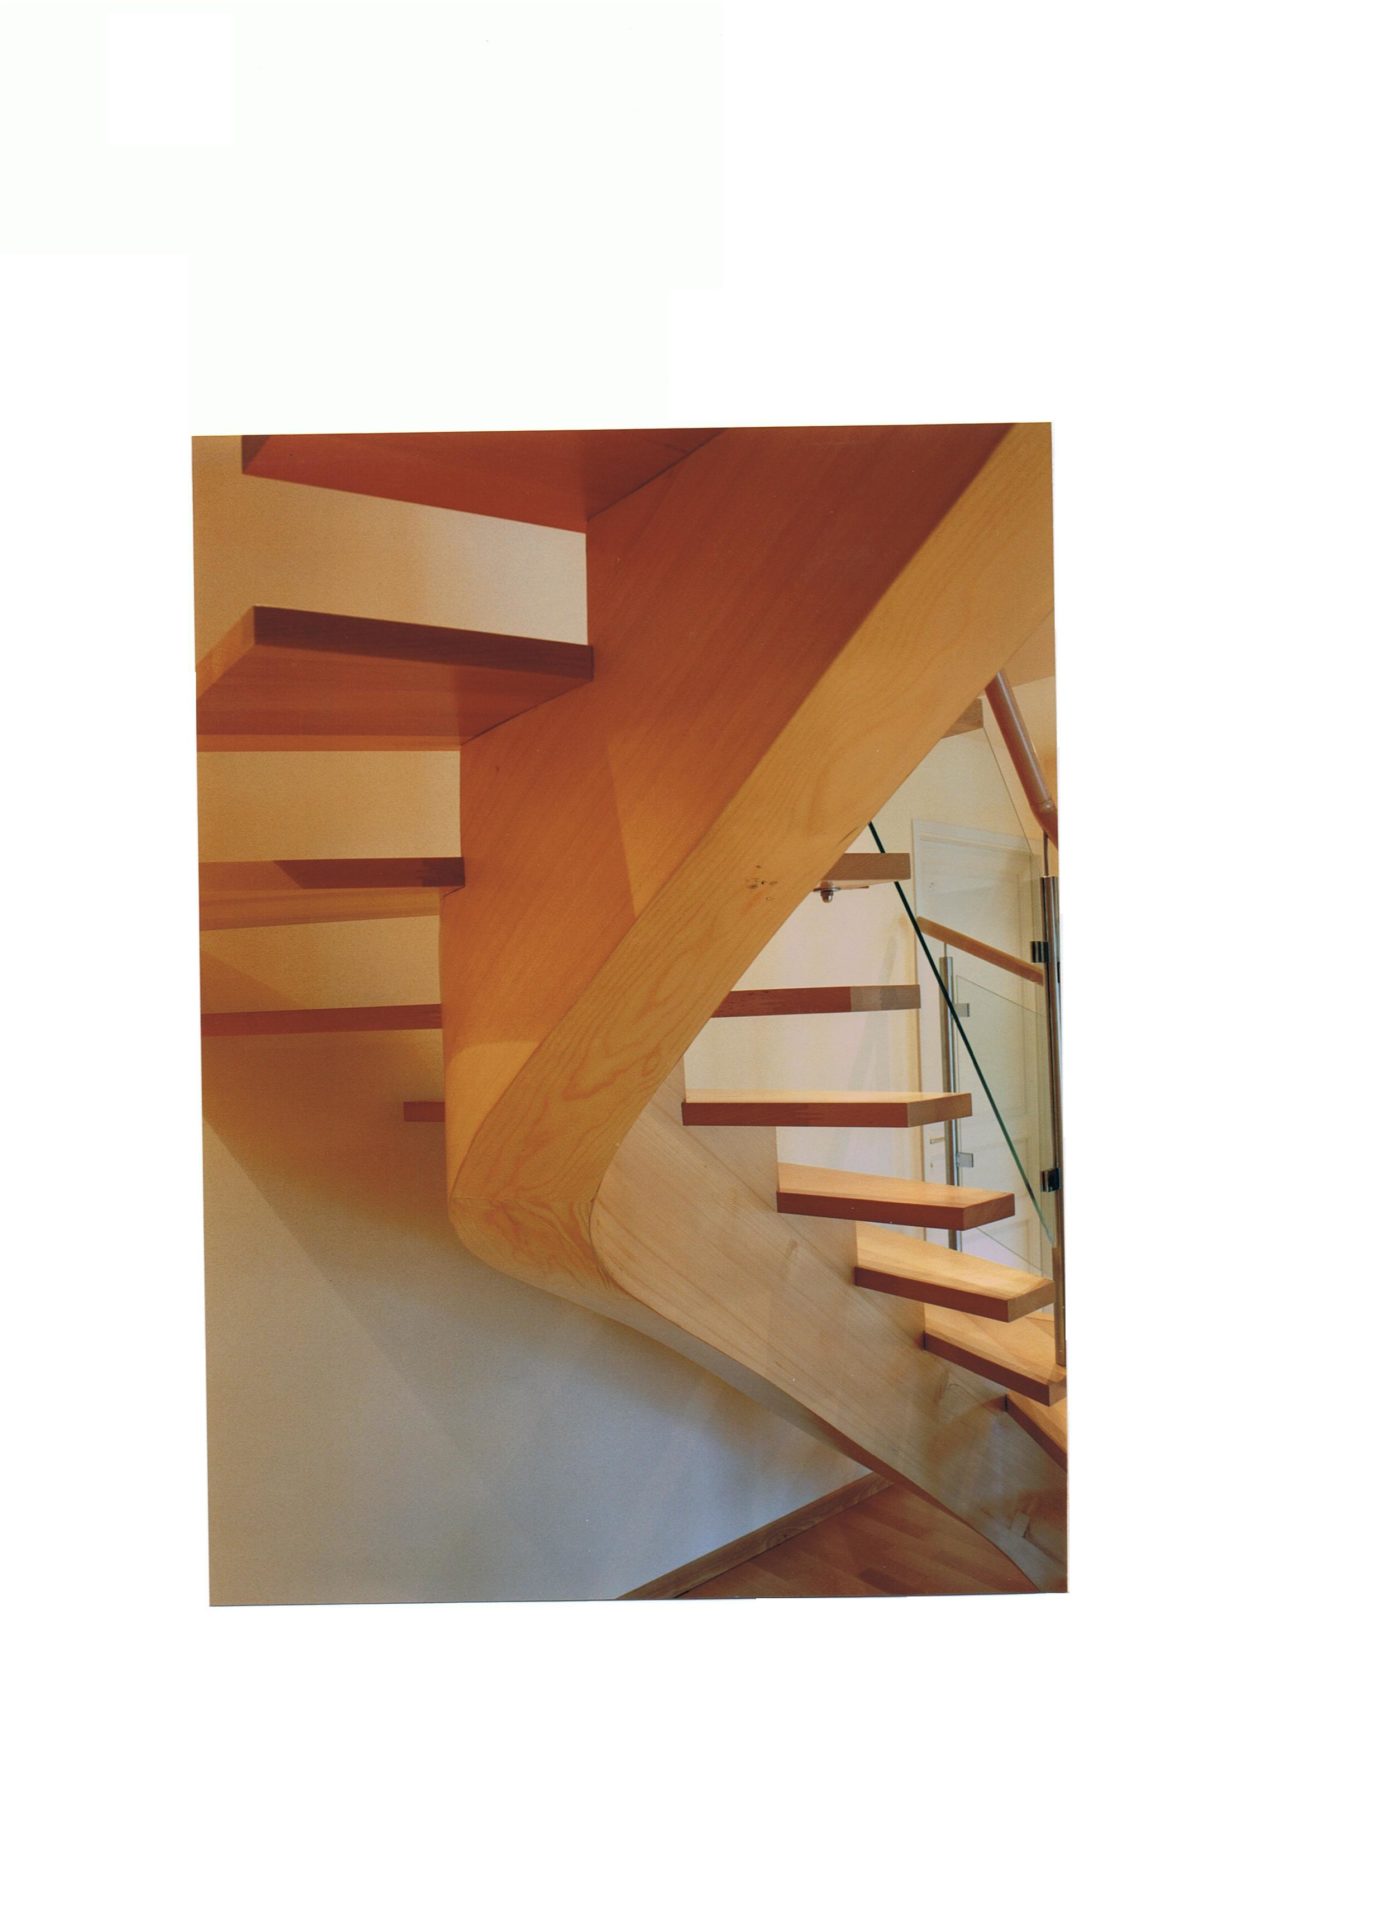 escalier en bois et rambarde en bois et verre